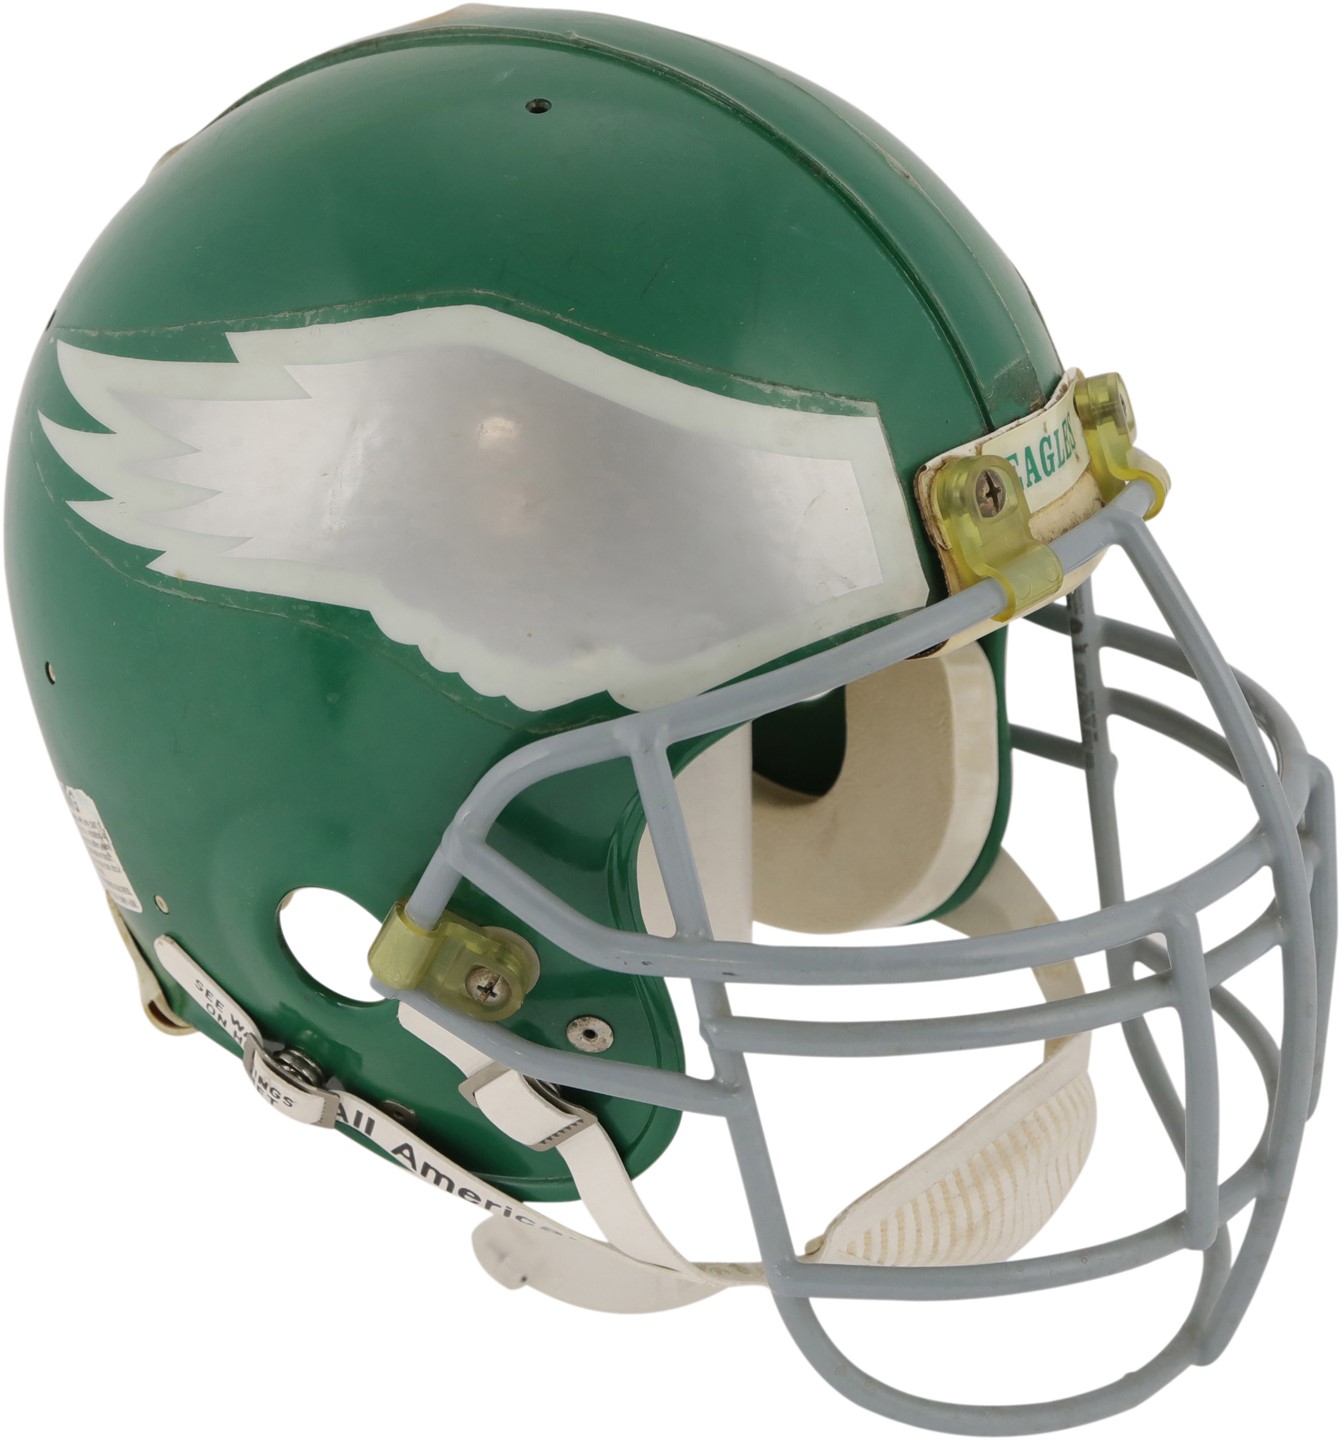 - Circa 1990 Reggie White Philadelphia Eagles Game Worn Helmet (NSM Museum Collection)